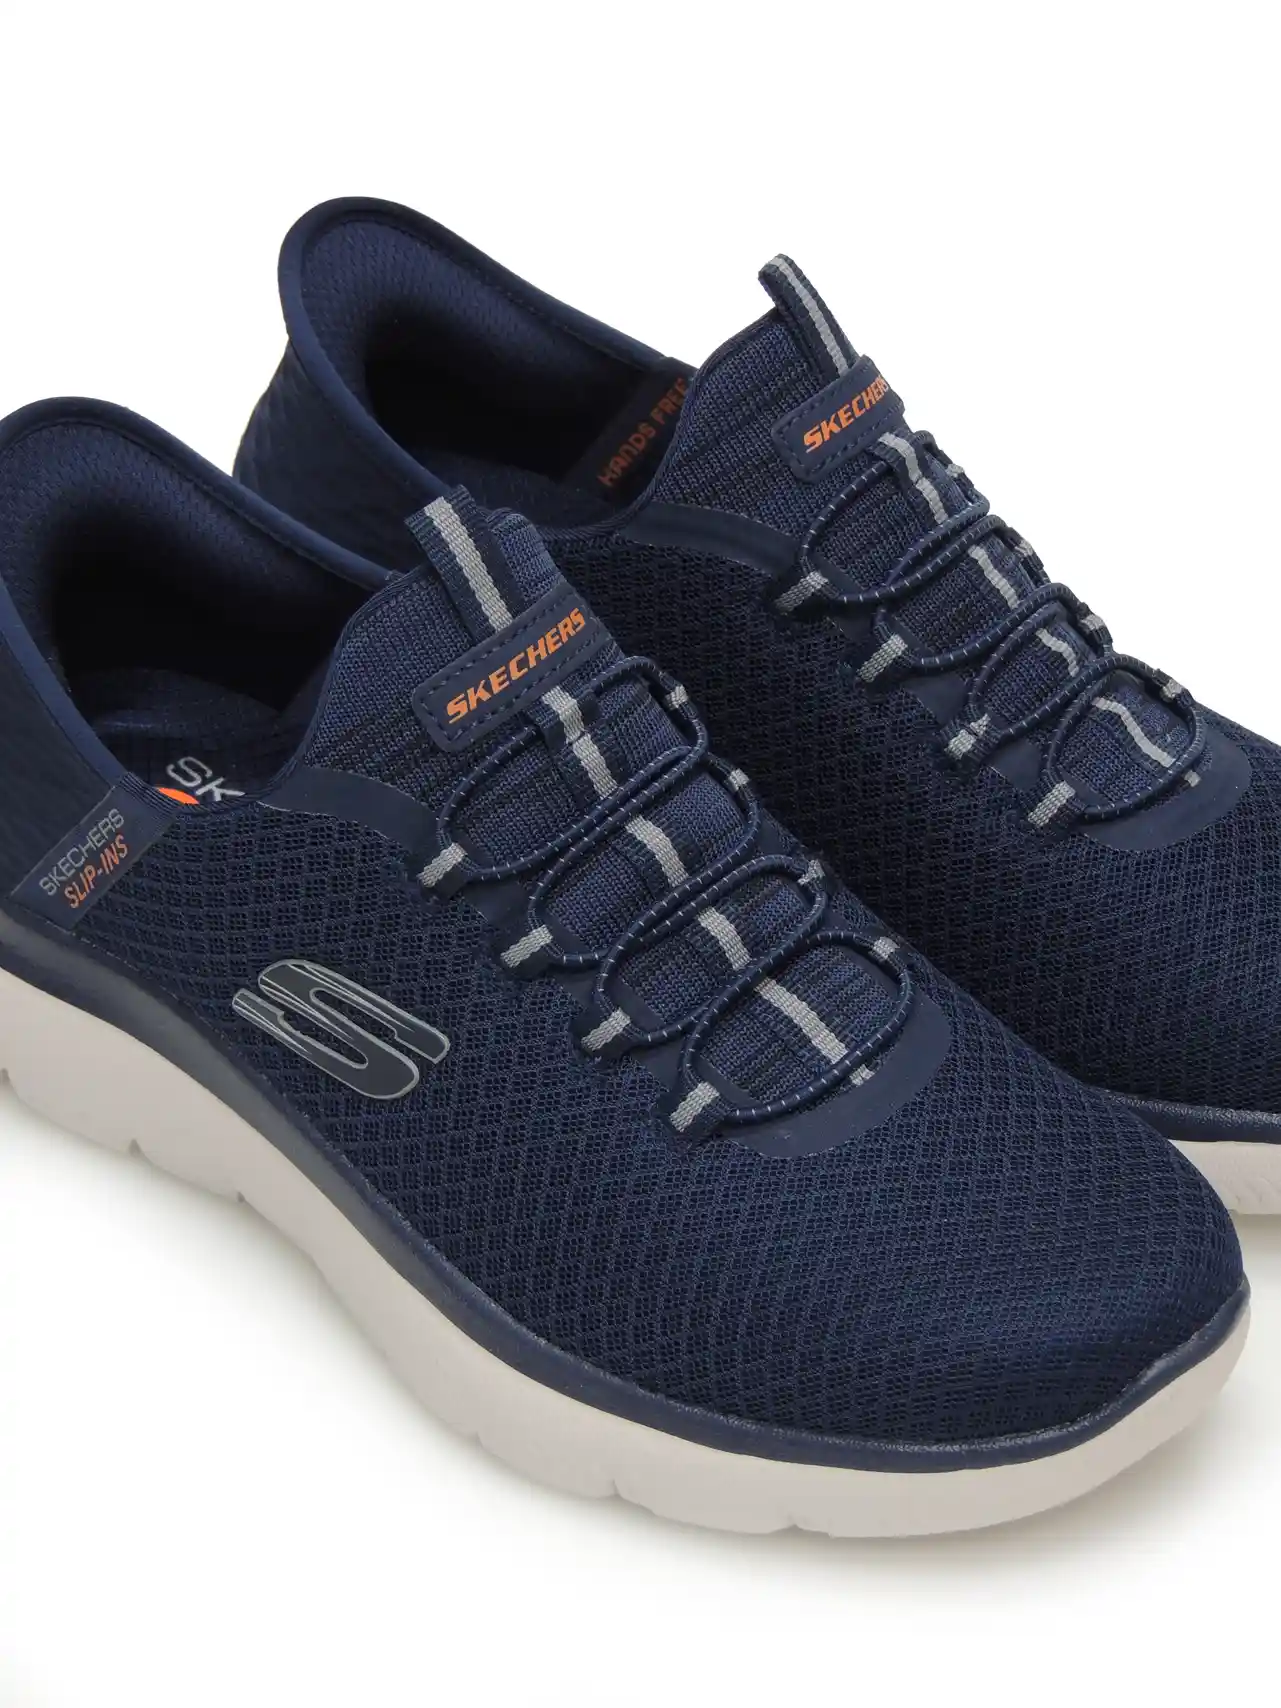 sneakers--skechers-232457-textil-marino